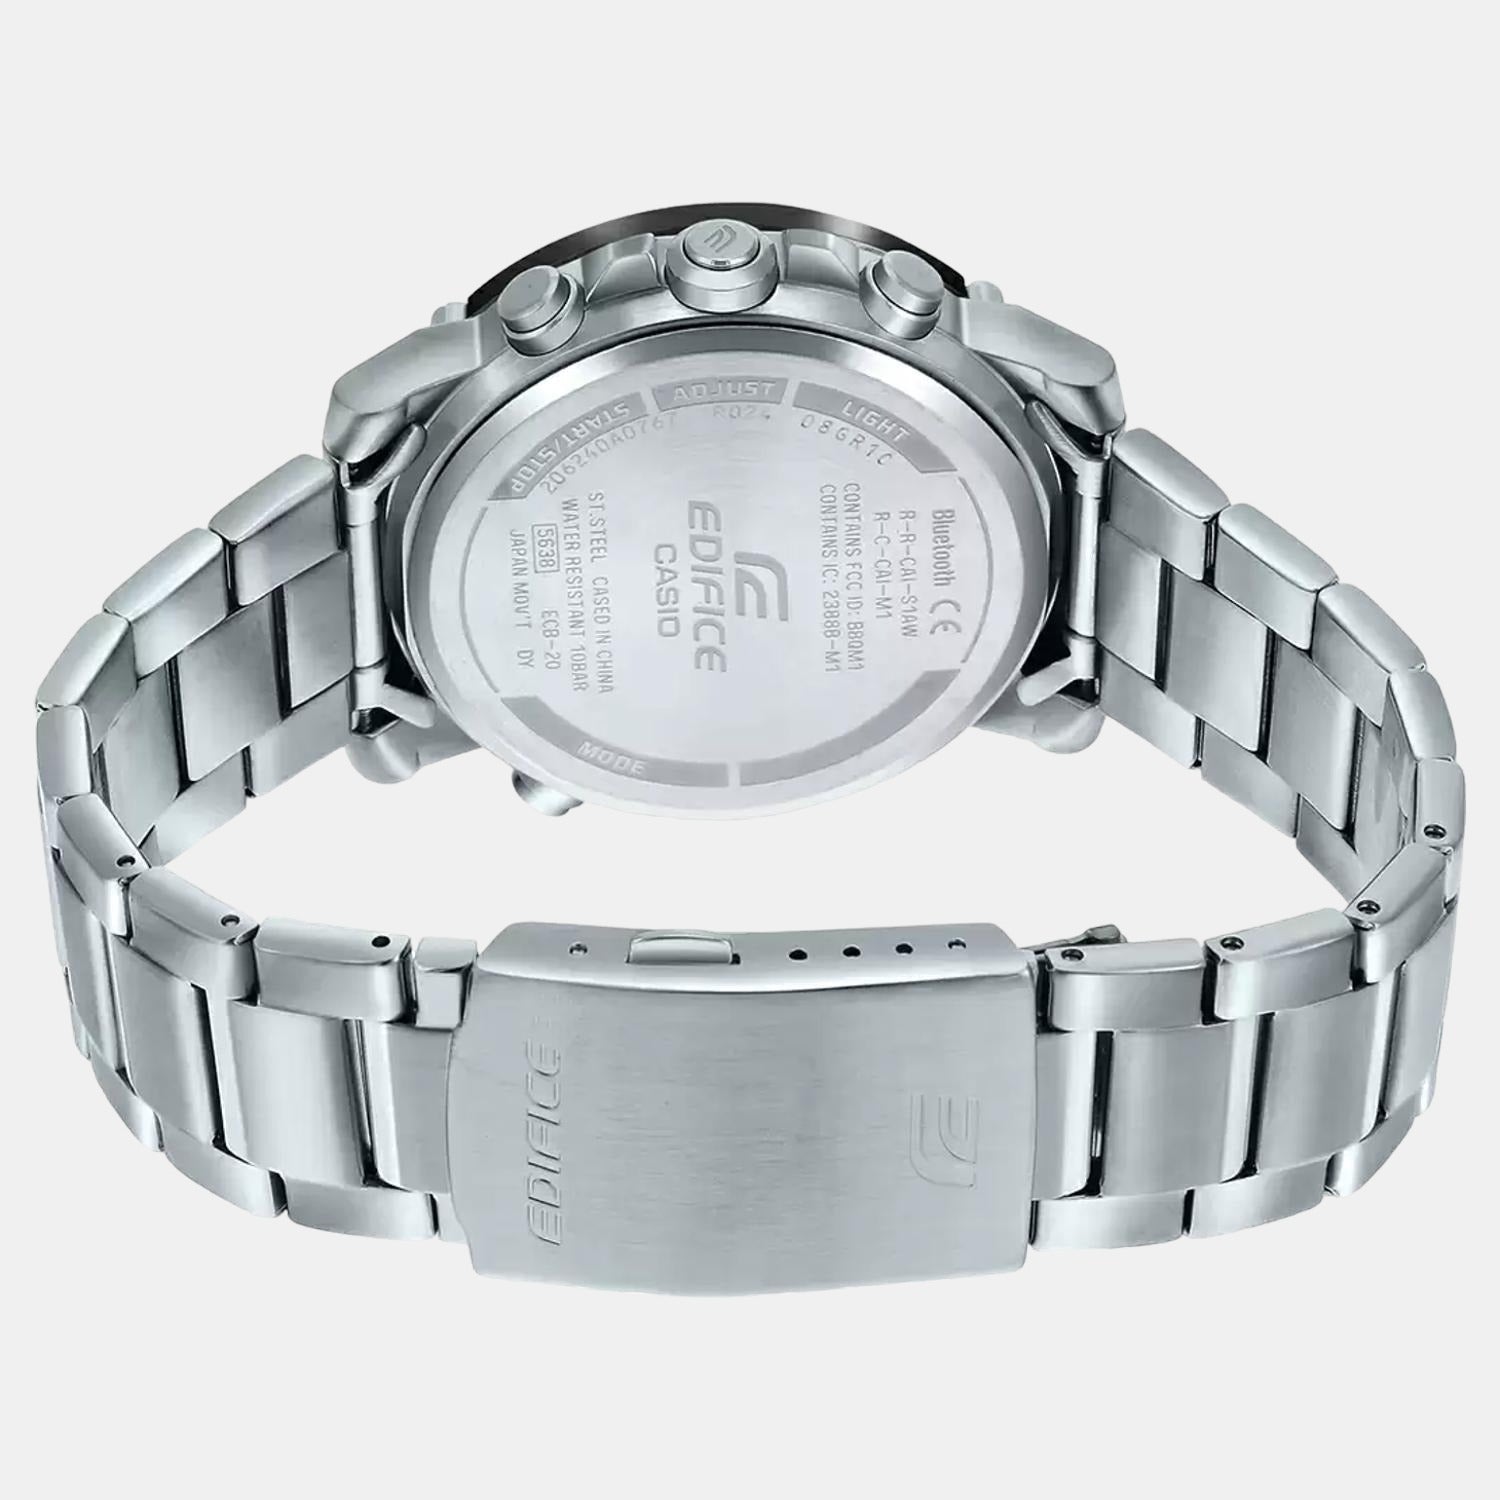 casio-stainless-steel-black-analog-digital-mens-watch-ex525